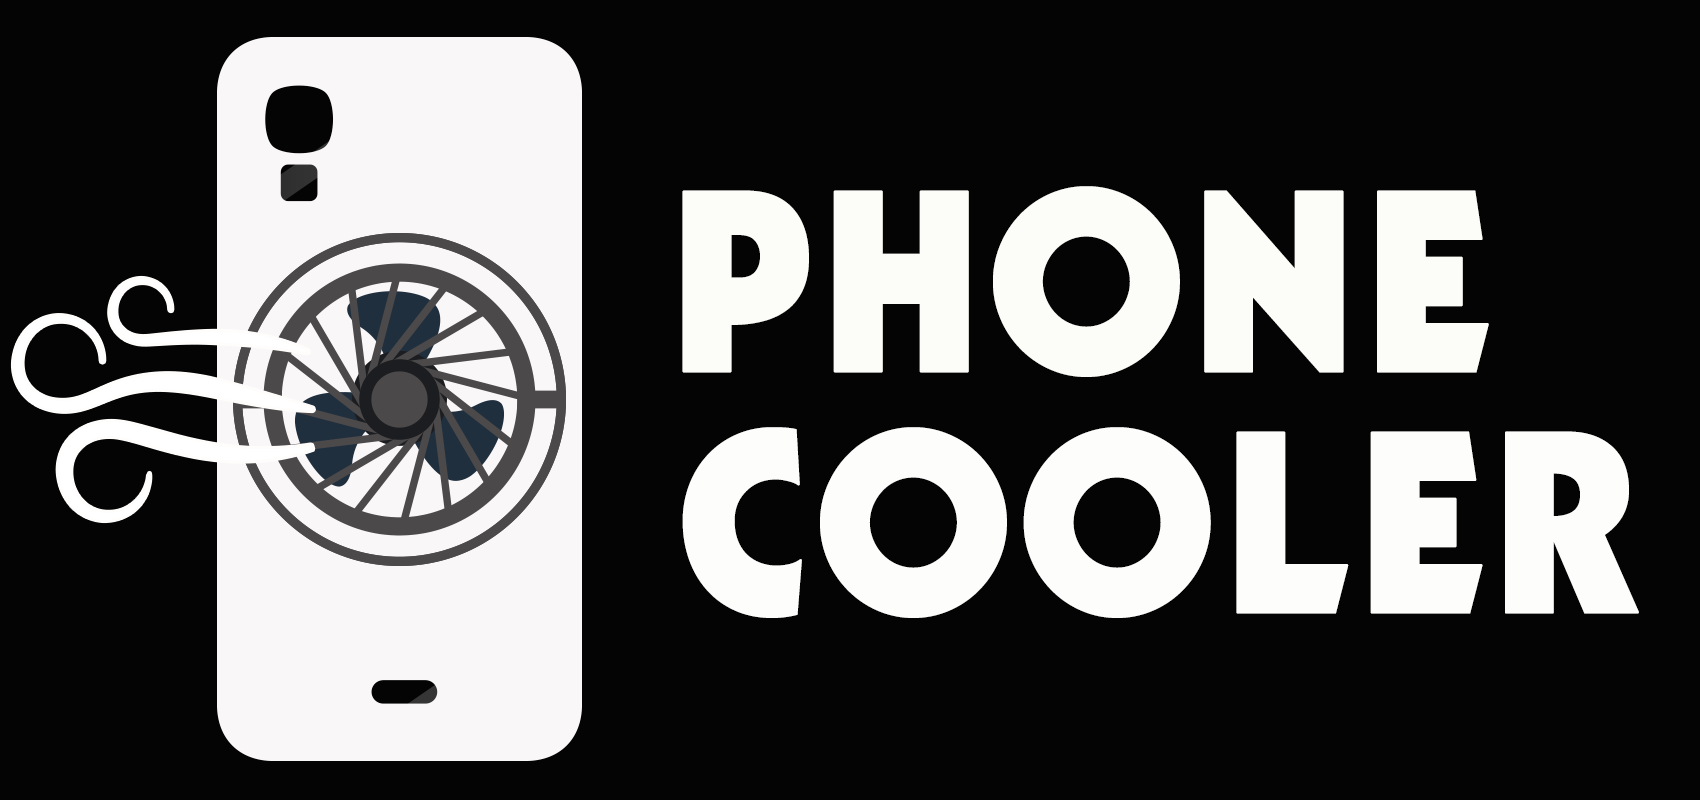 phone cooler logo black - Phone Cooler